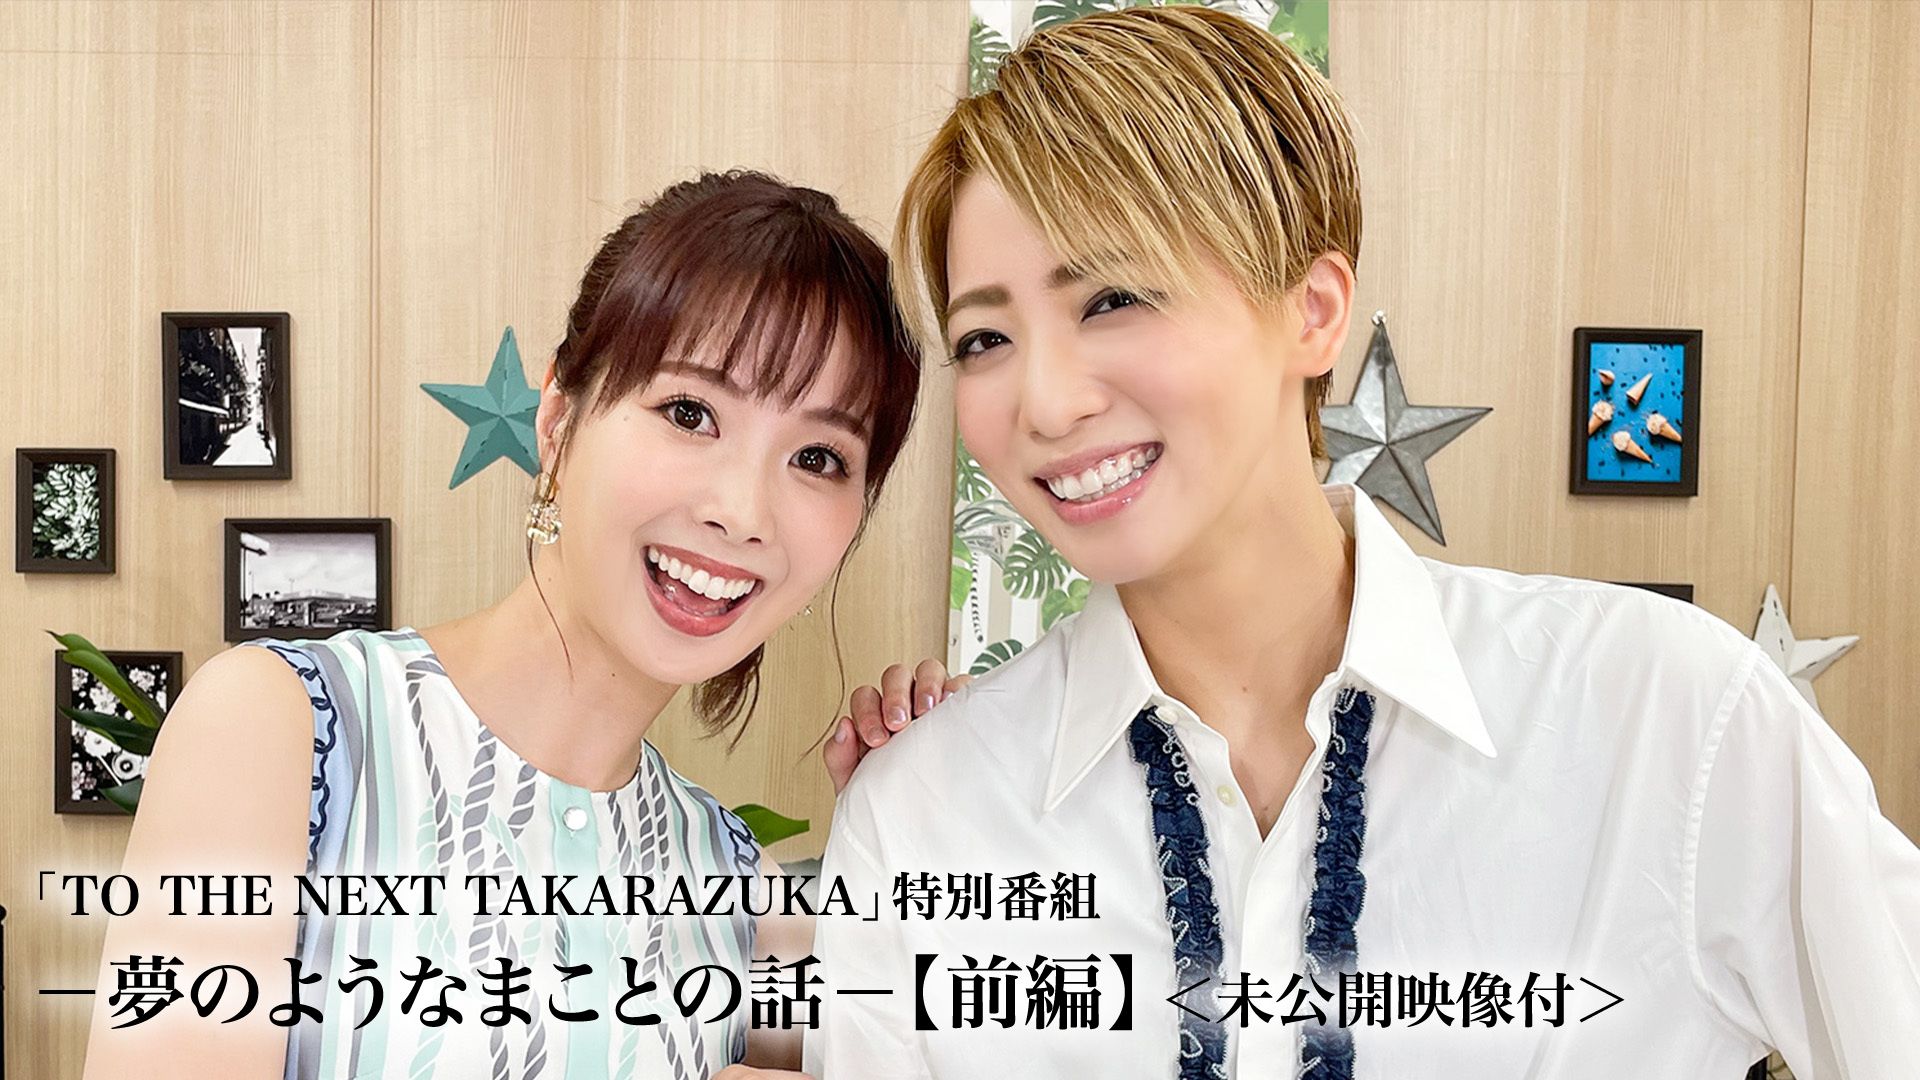 「TO THE NEXT TAKARAZUKA」特別番組-夢のようなまことの話-【前編】<未公開映像付>